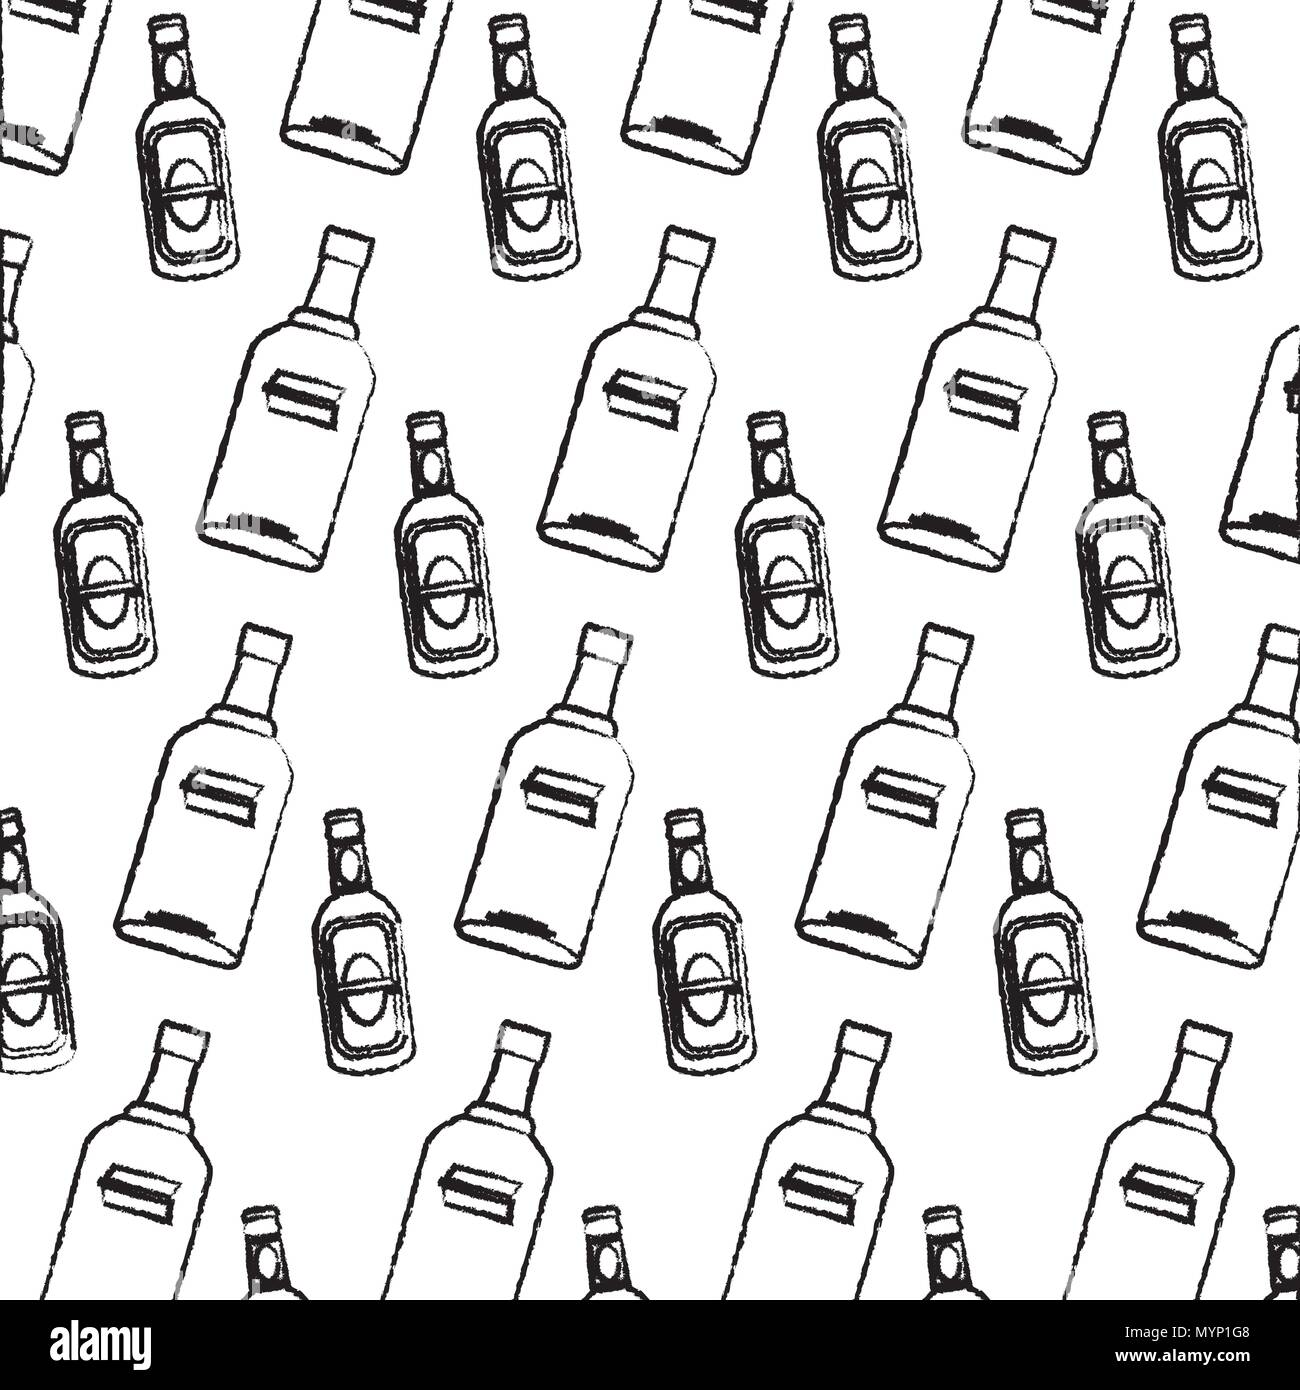 grunge vodka and schnapps liquor bottle background Stock Vector Image ...